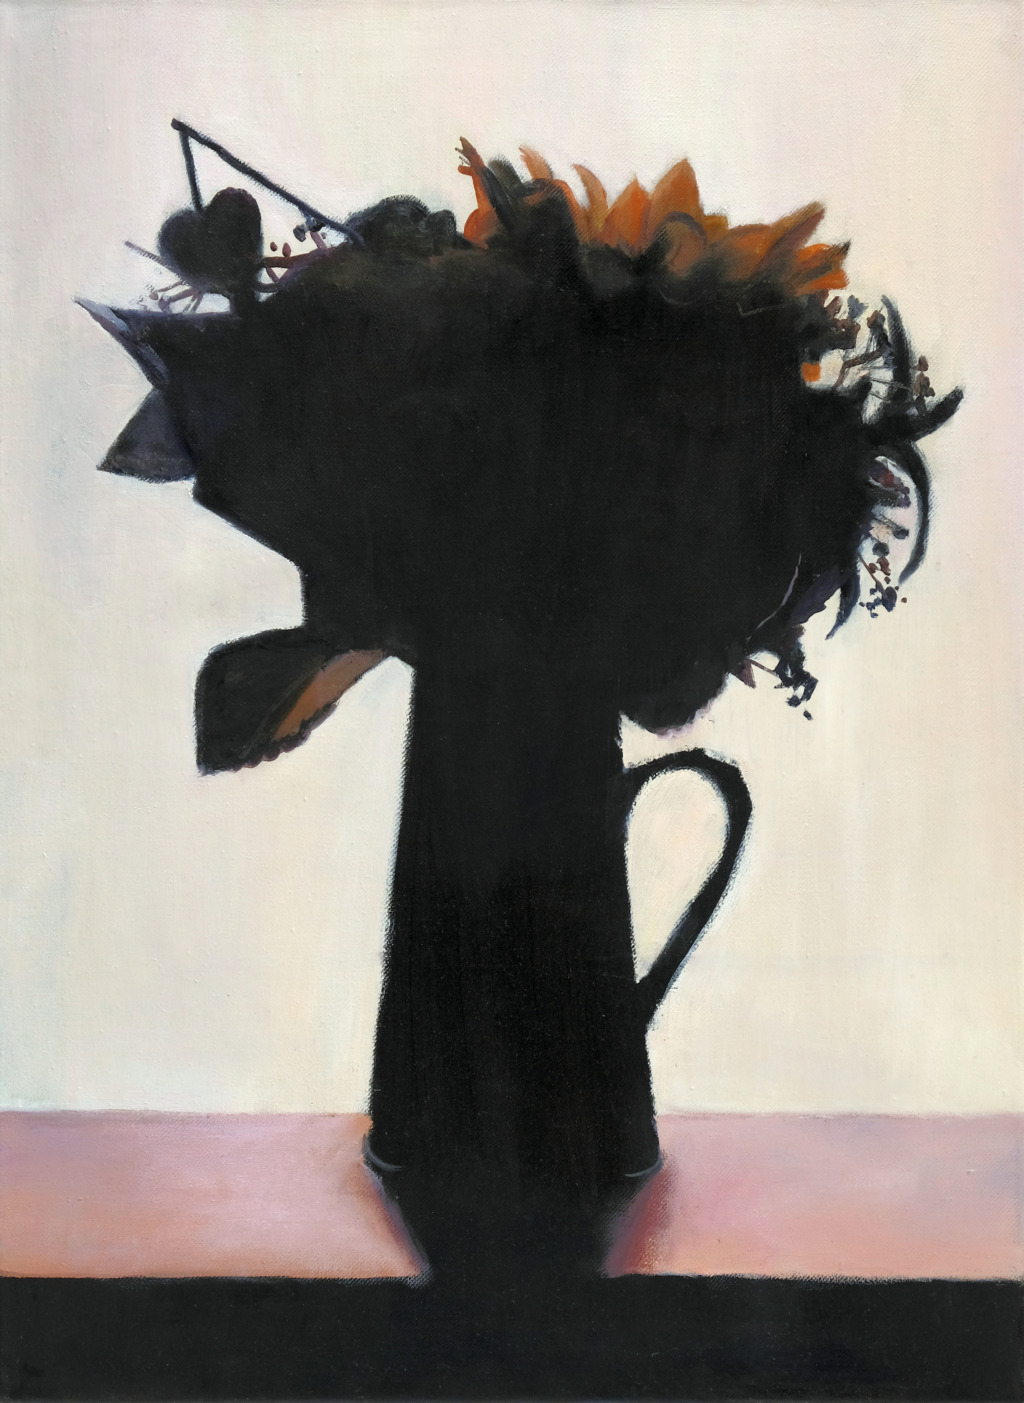 Andrea Muheim, Von H-B, 2020
Oil on canvas
69 x 50 cm